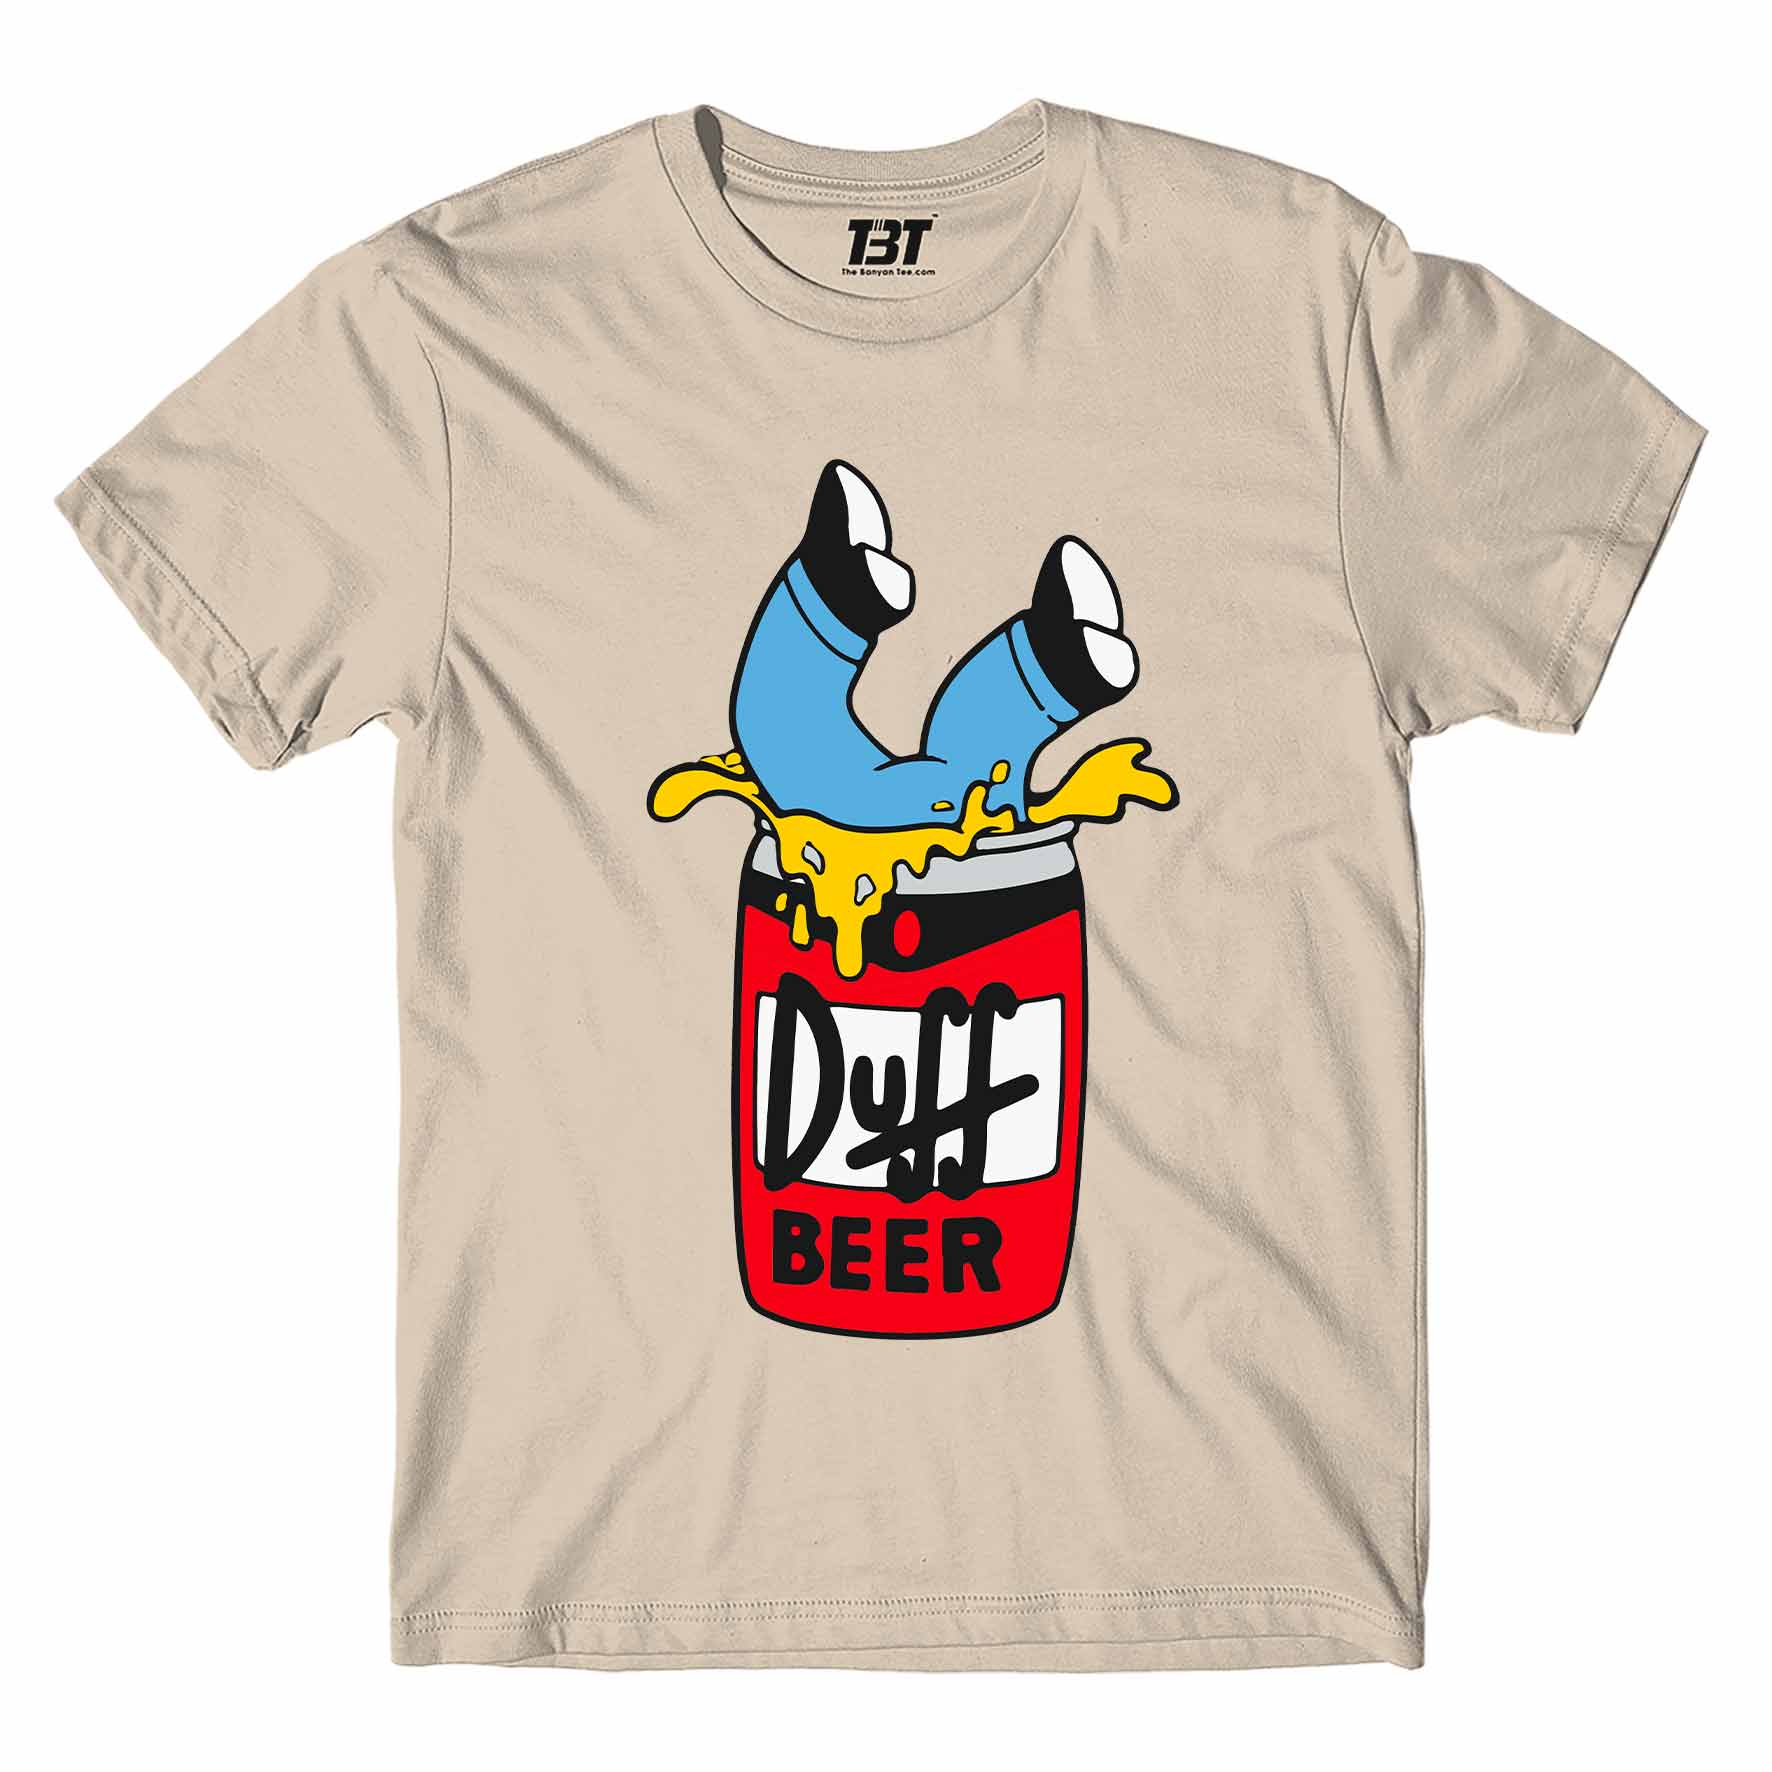 The Simpsons T-shirt Shirt Clothing Merchandise Apparel